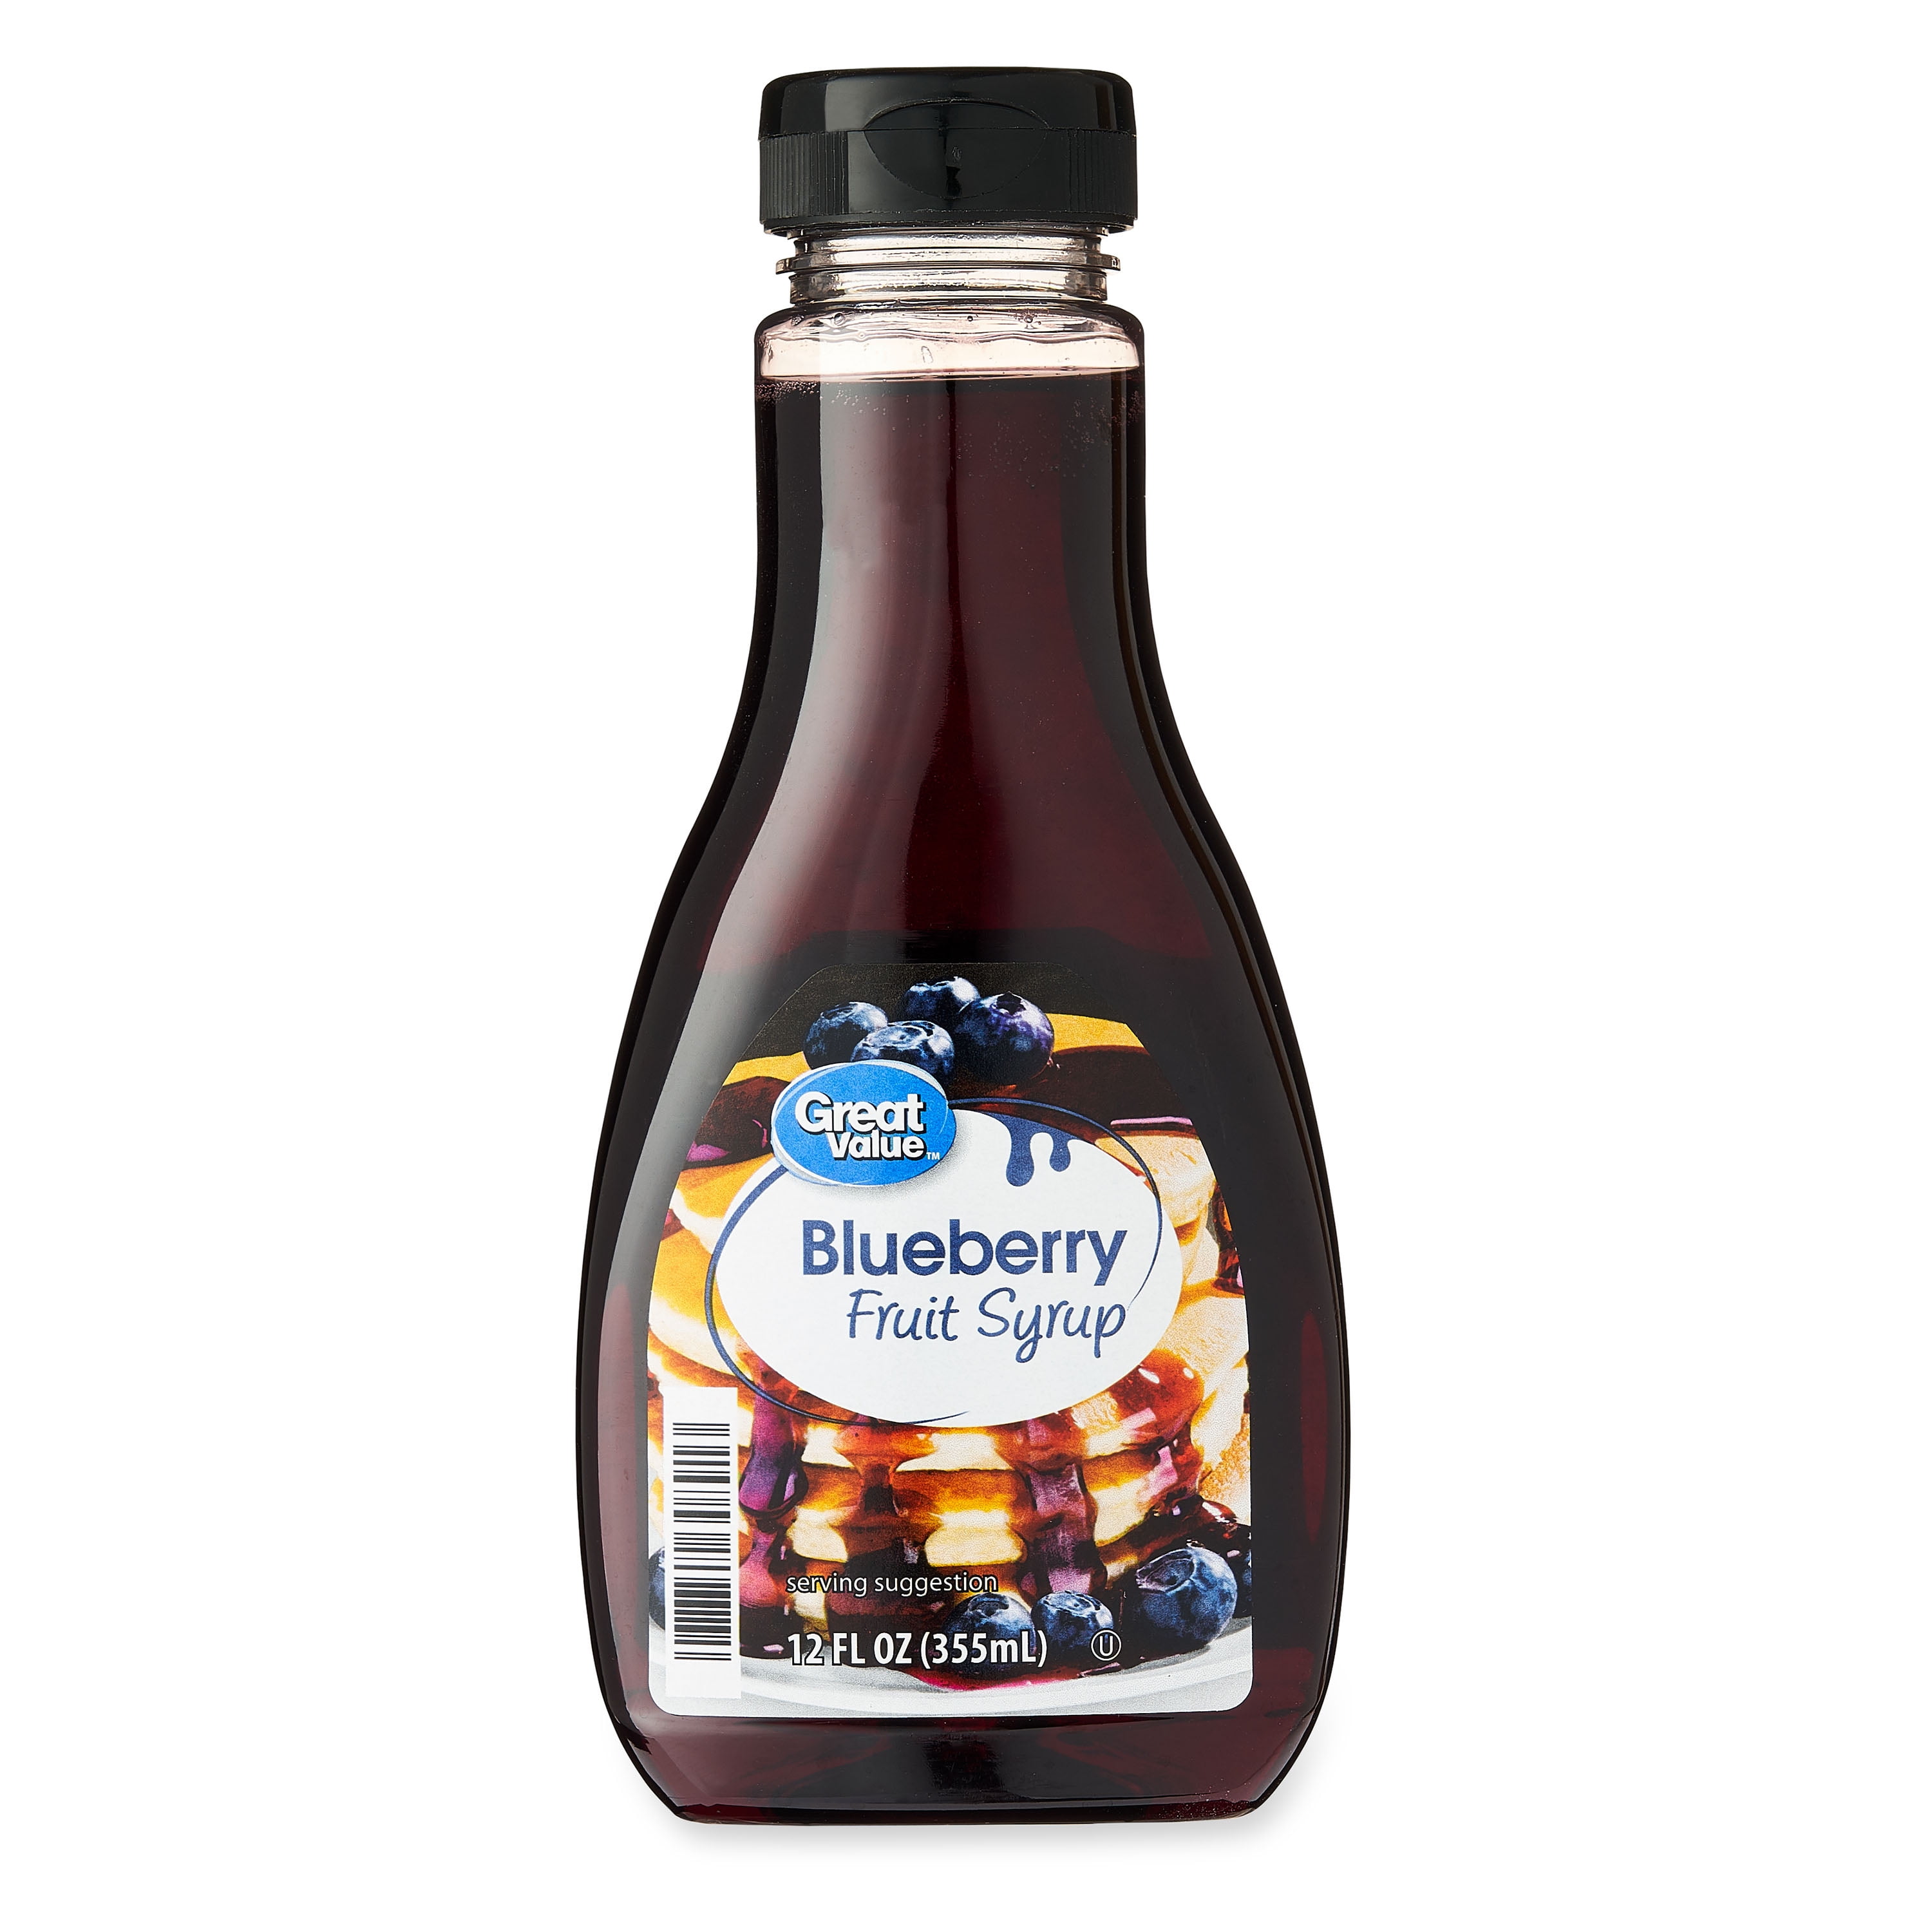 Great Value Blueberry Fruit Syrup, 12 fl oz